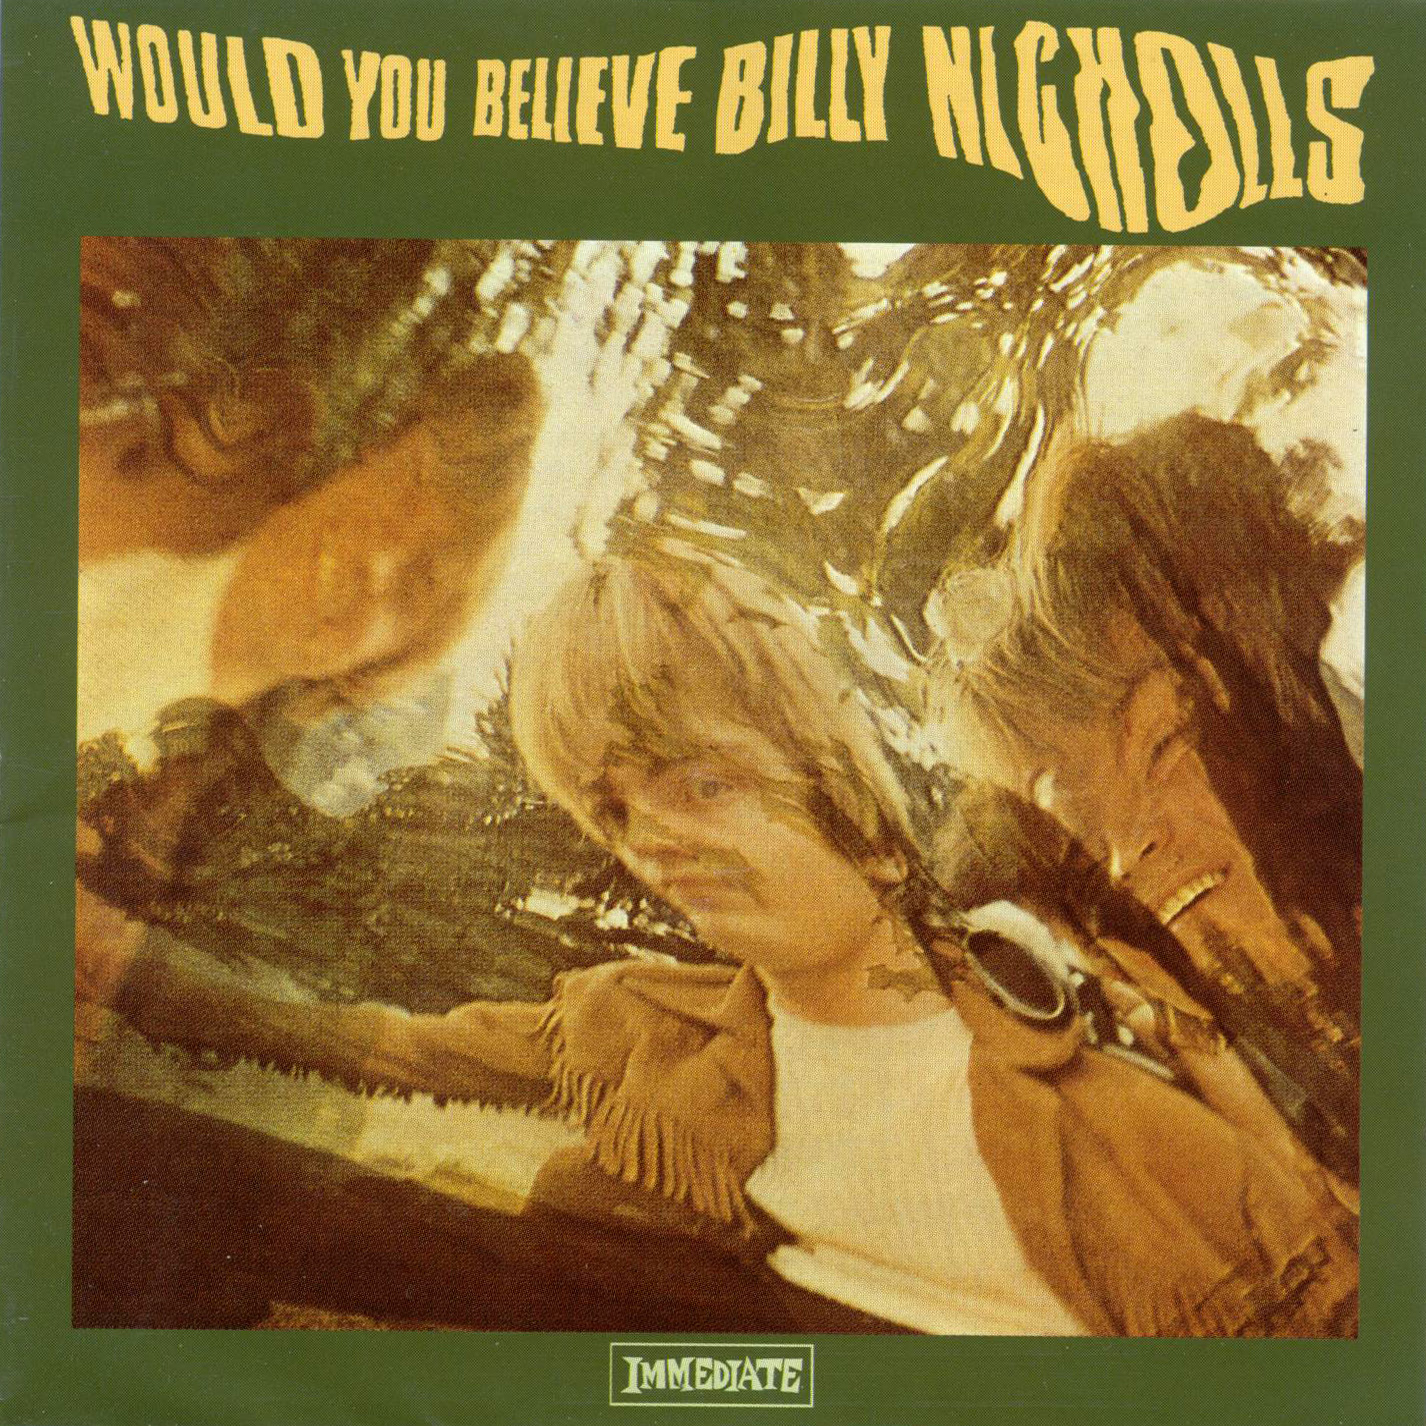 Billy-Nicholls-Would-You-Believe